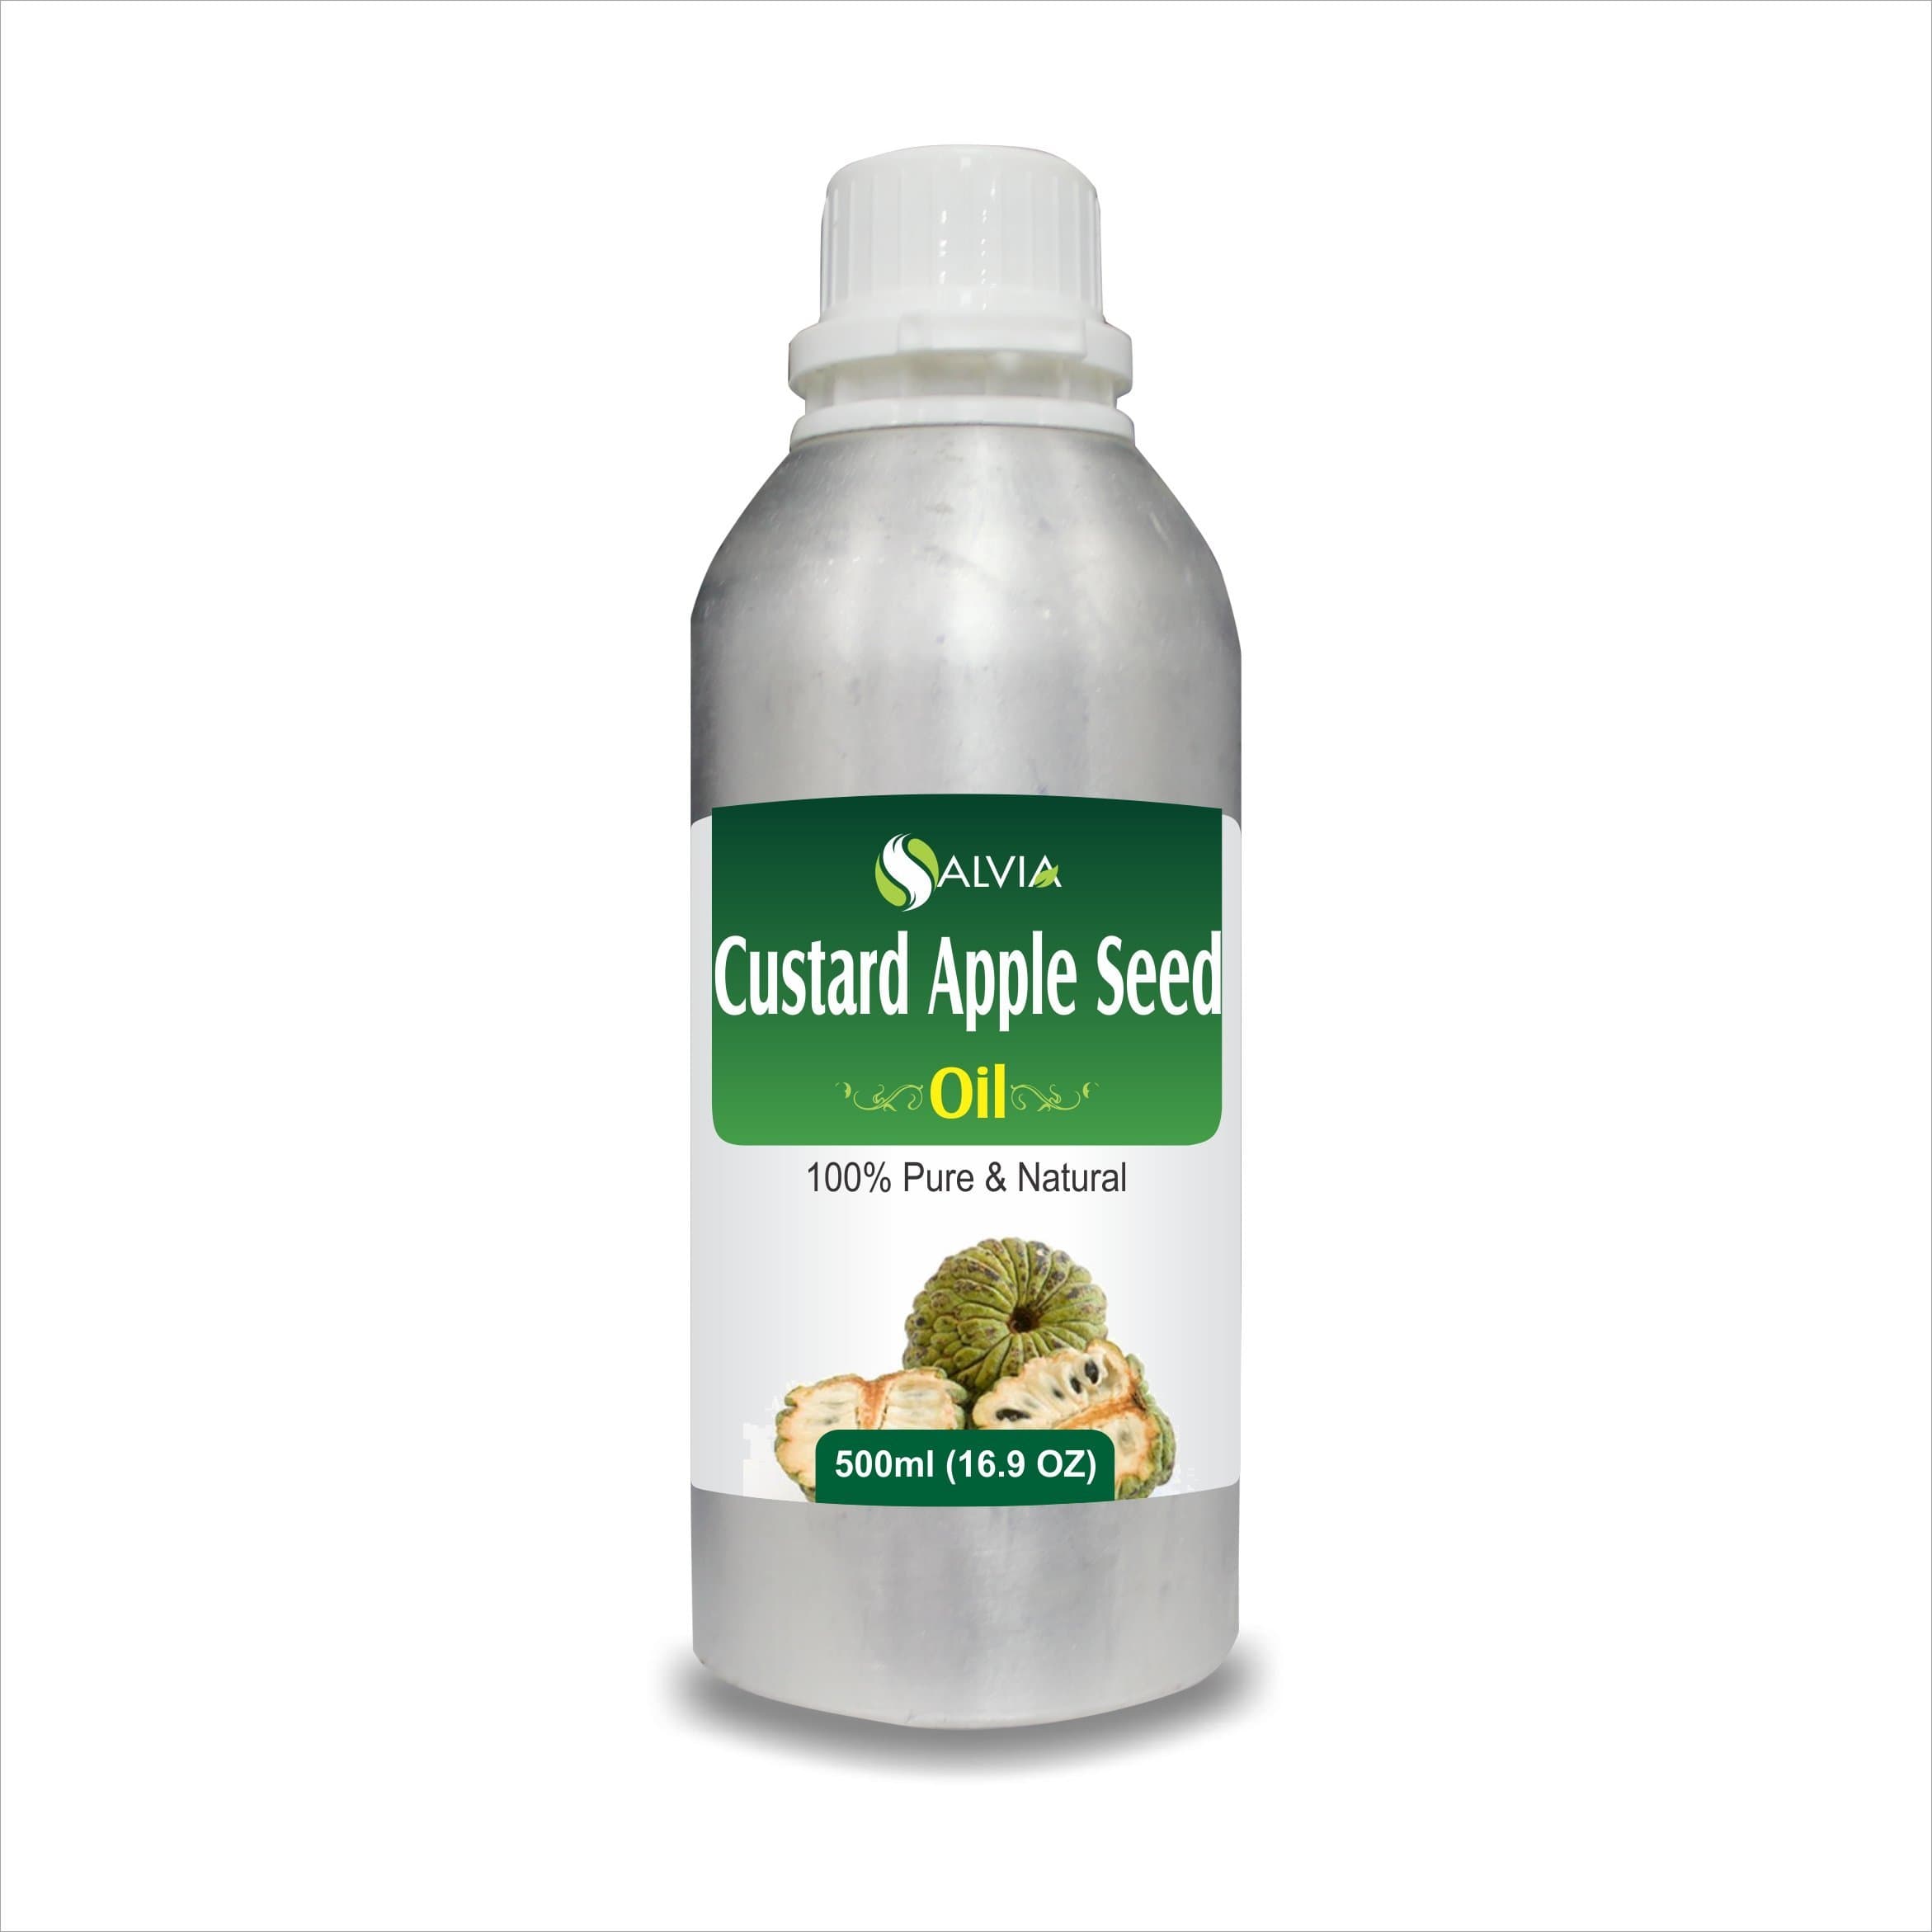 custard apple seed oil benefits